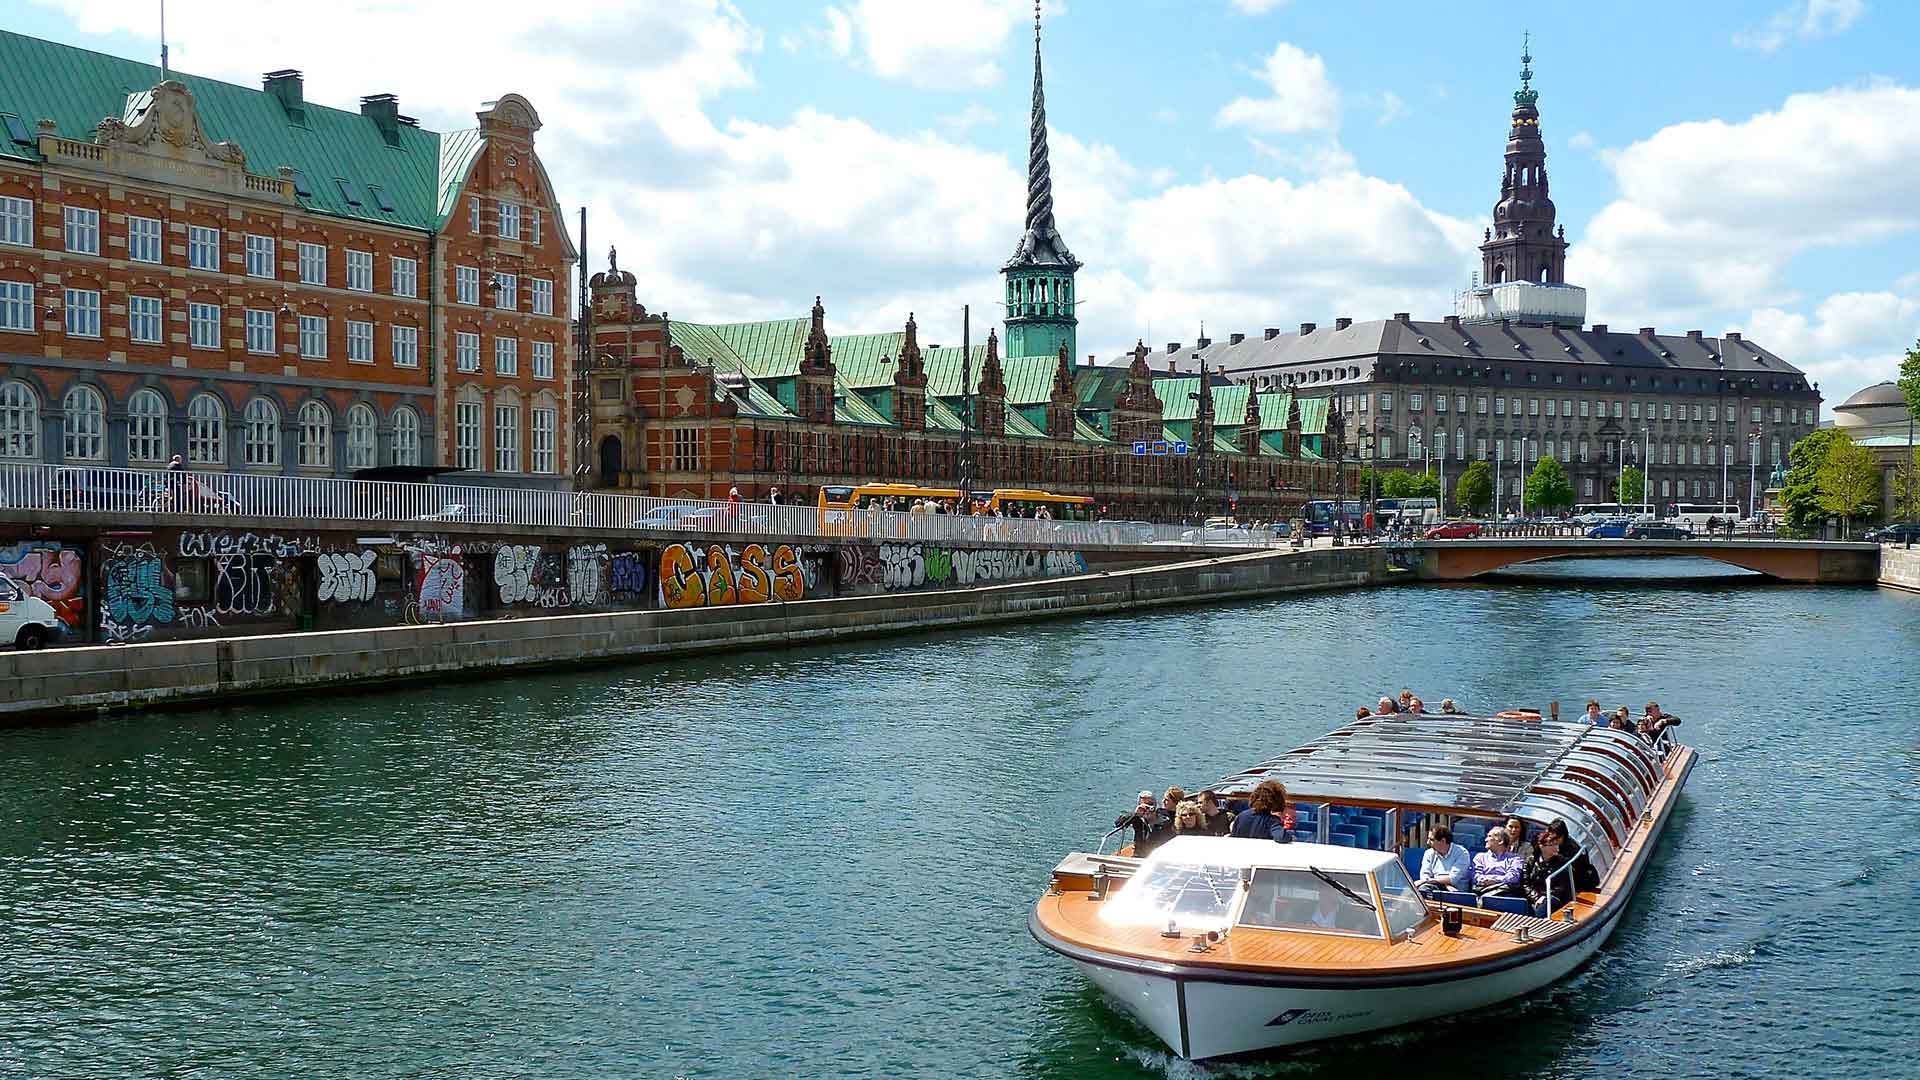 Christiansborg canal in Copenhagen